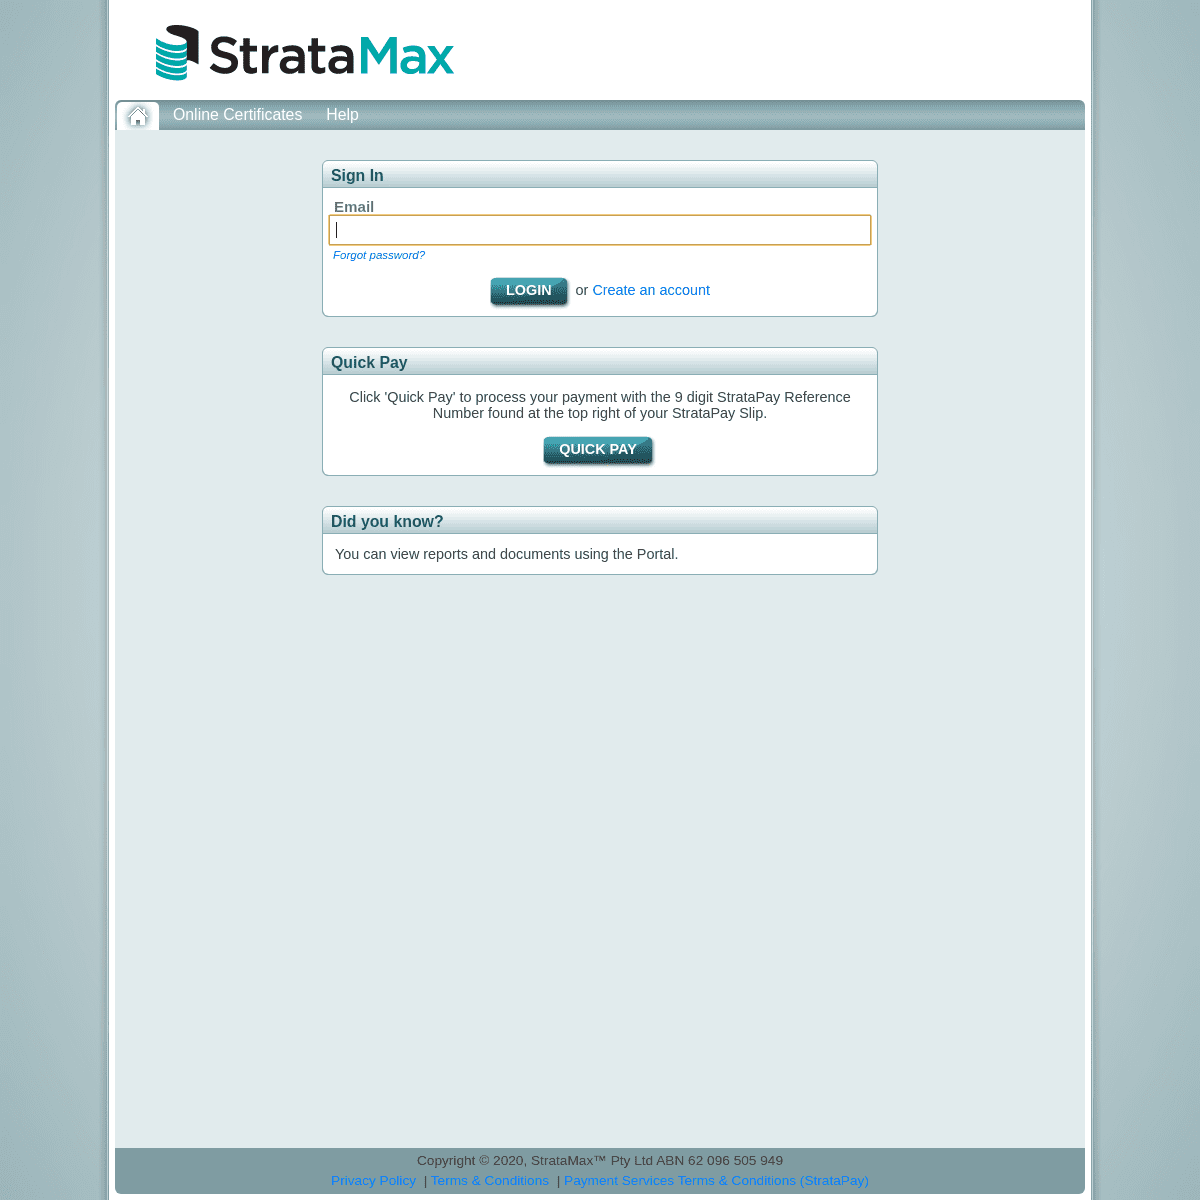 A complete backup of stratamax.com.au